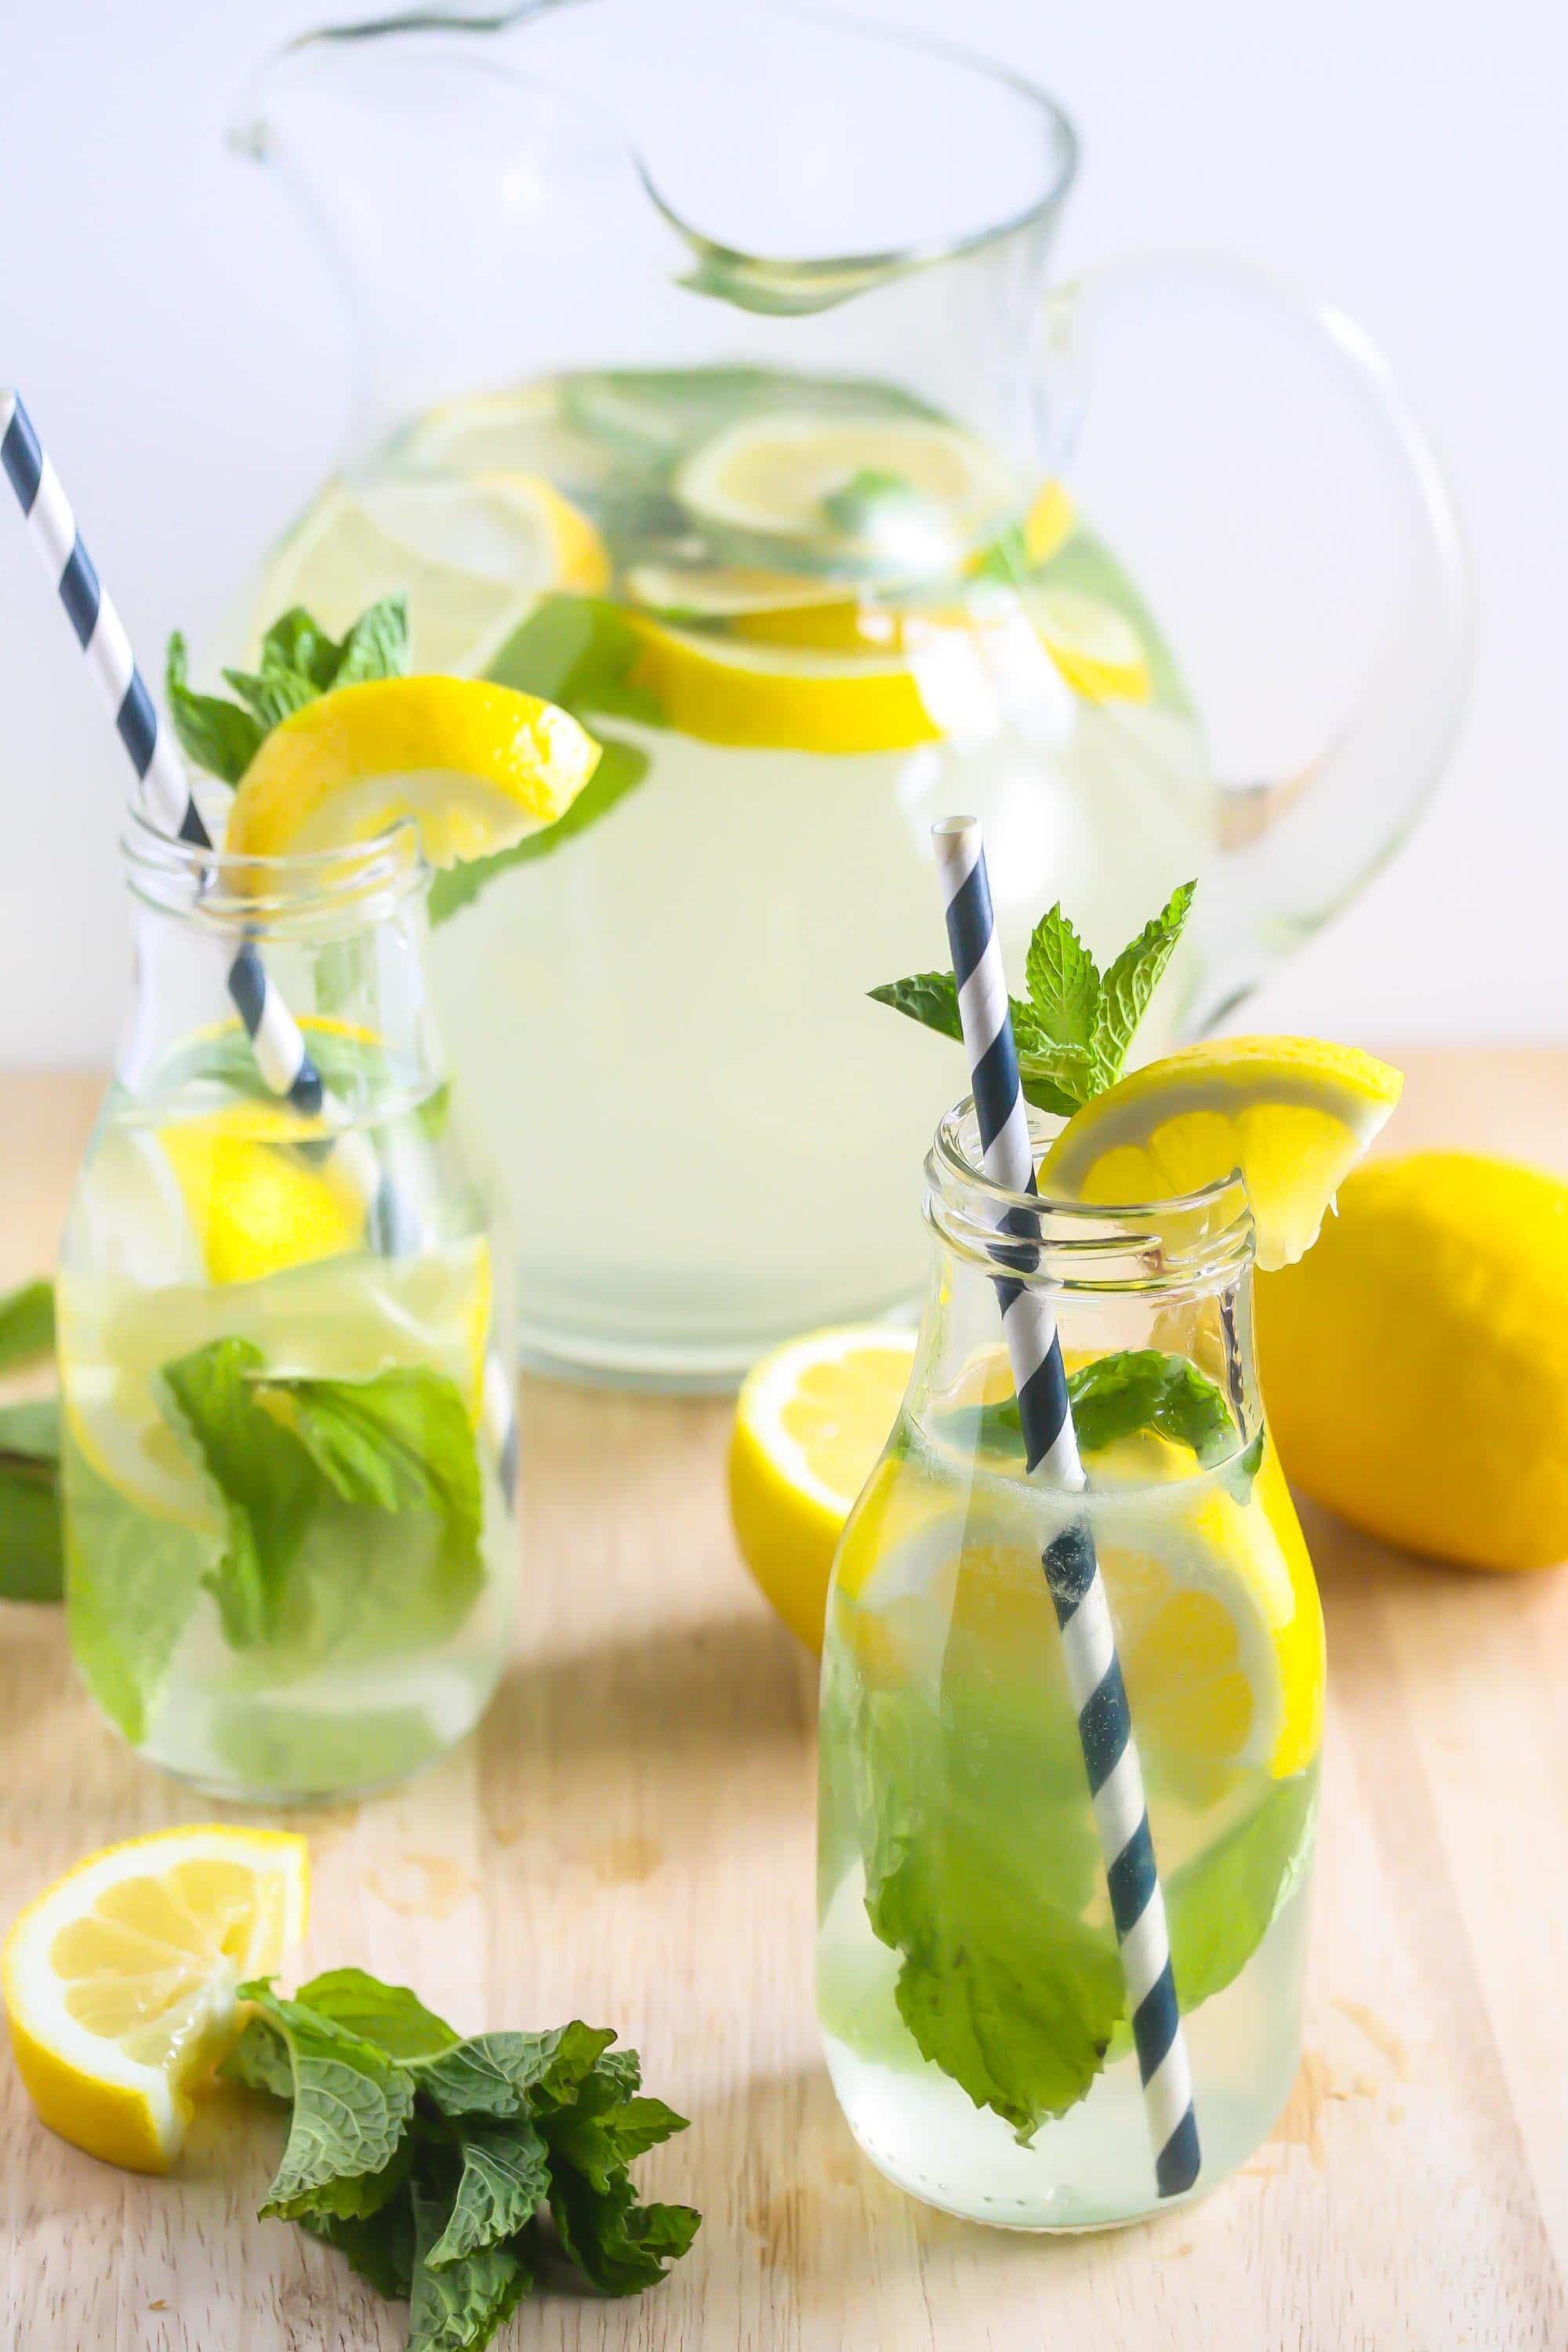 You can enjoy this refreshing Coconut Water Ginger Lemonade all year long! #vegan #healthy www.laurenkellynutrition.com